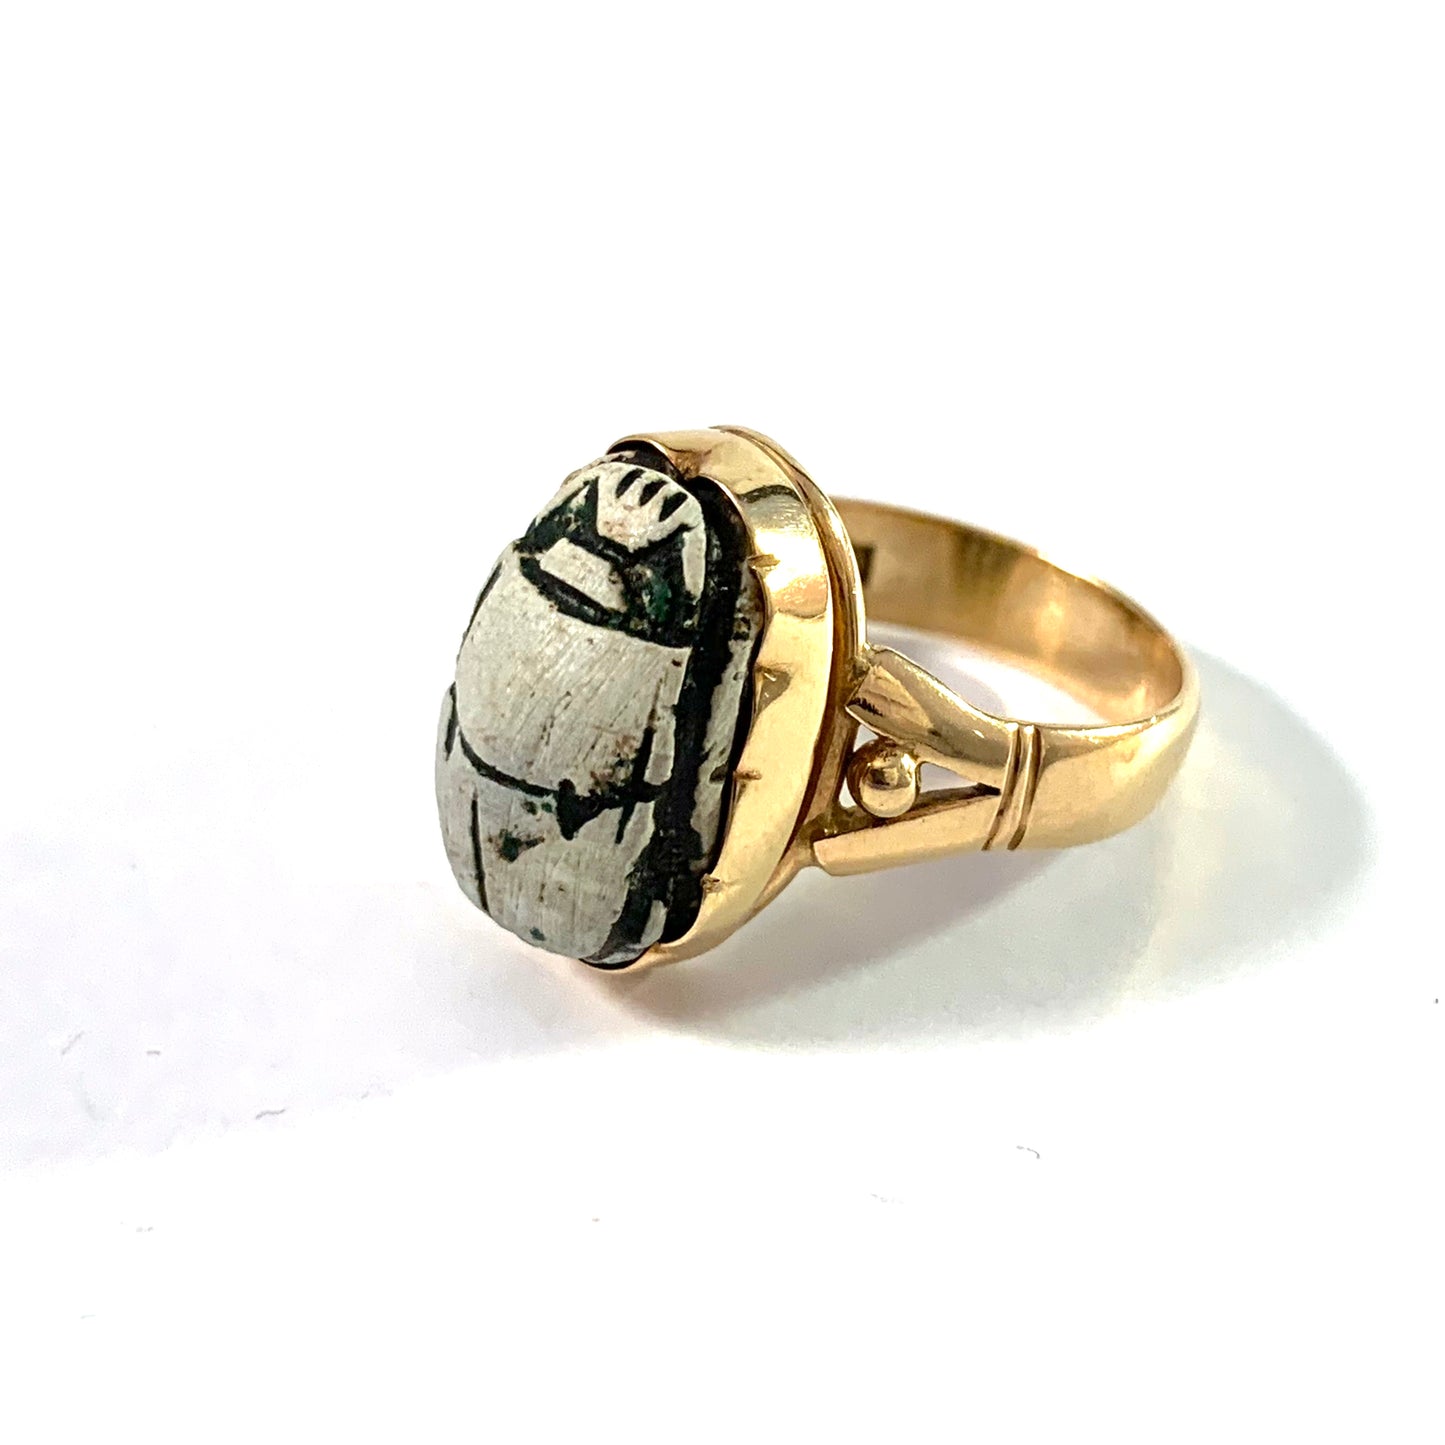 M.K.S Guldsmedsatelier, Sweden 1967. Vintage 18k Gold Egyptian Scarab Ring.